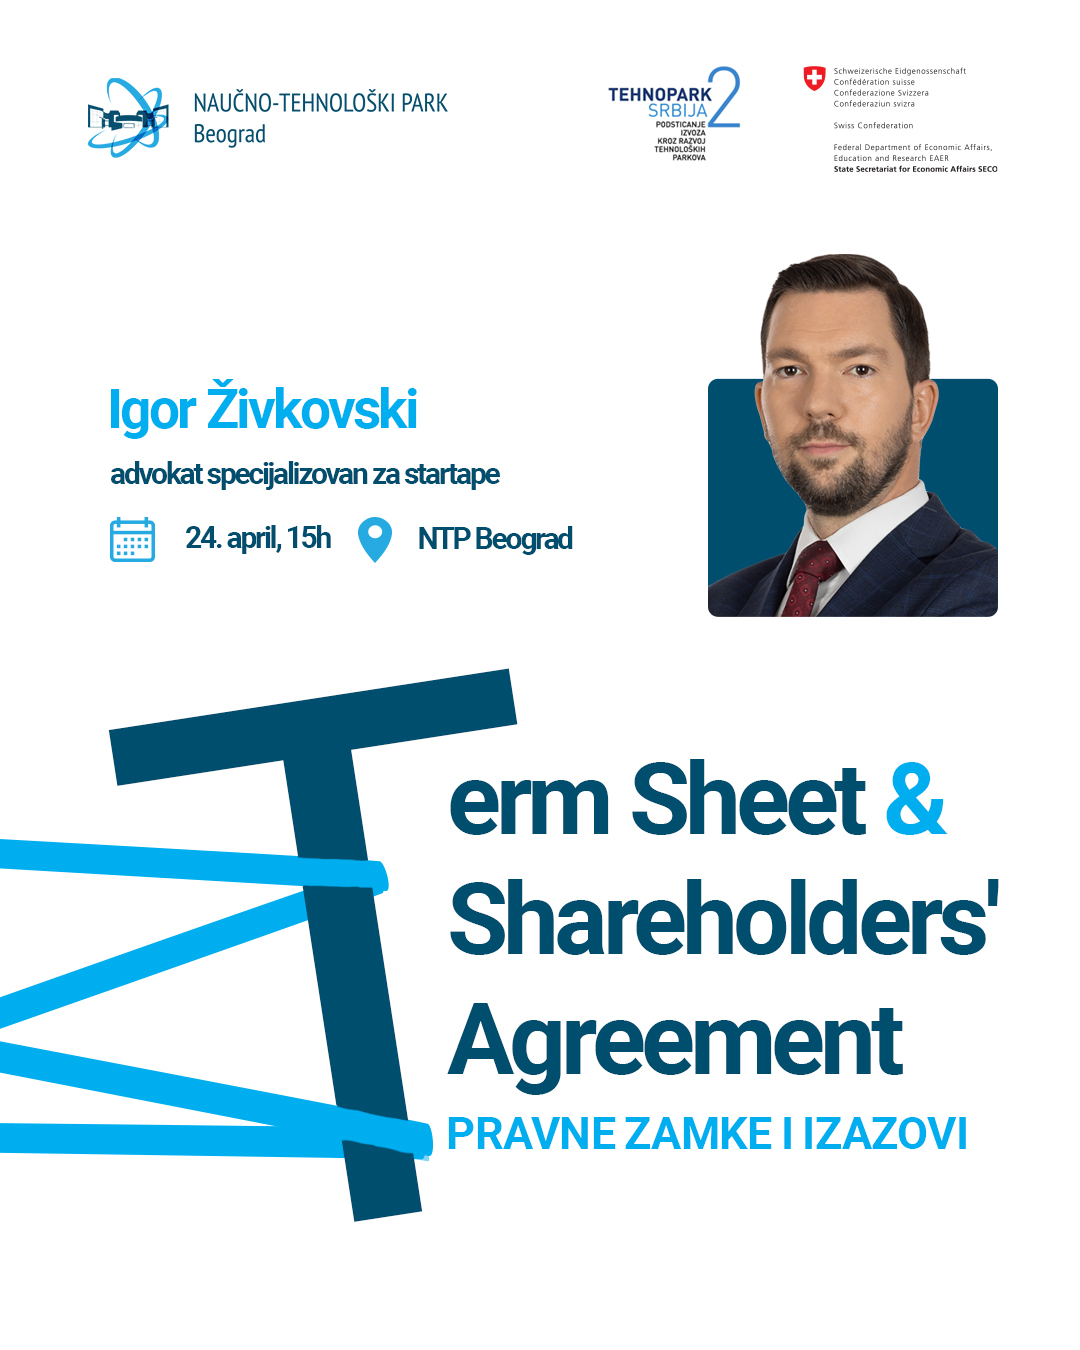 Term Sheet & Shareholders’ Agreement- Pravne zamke i izazovi by Igor Živkovski